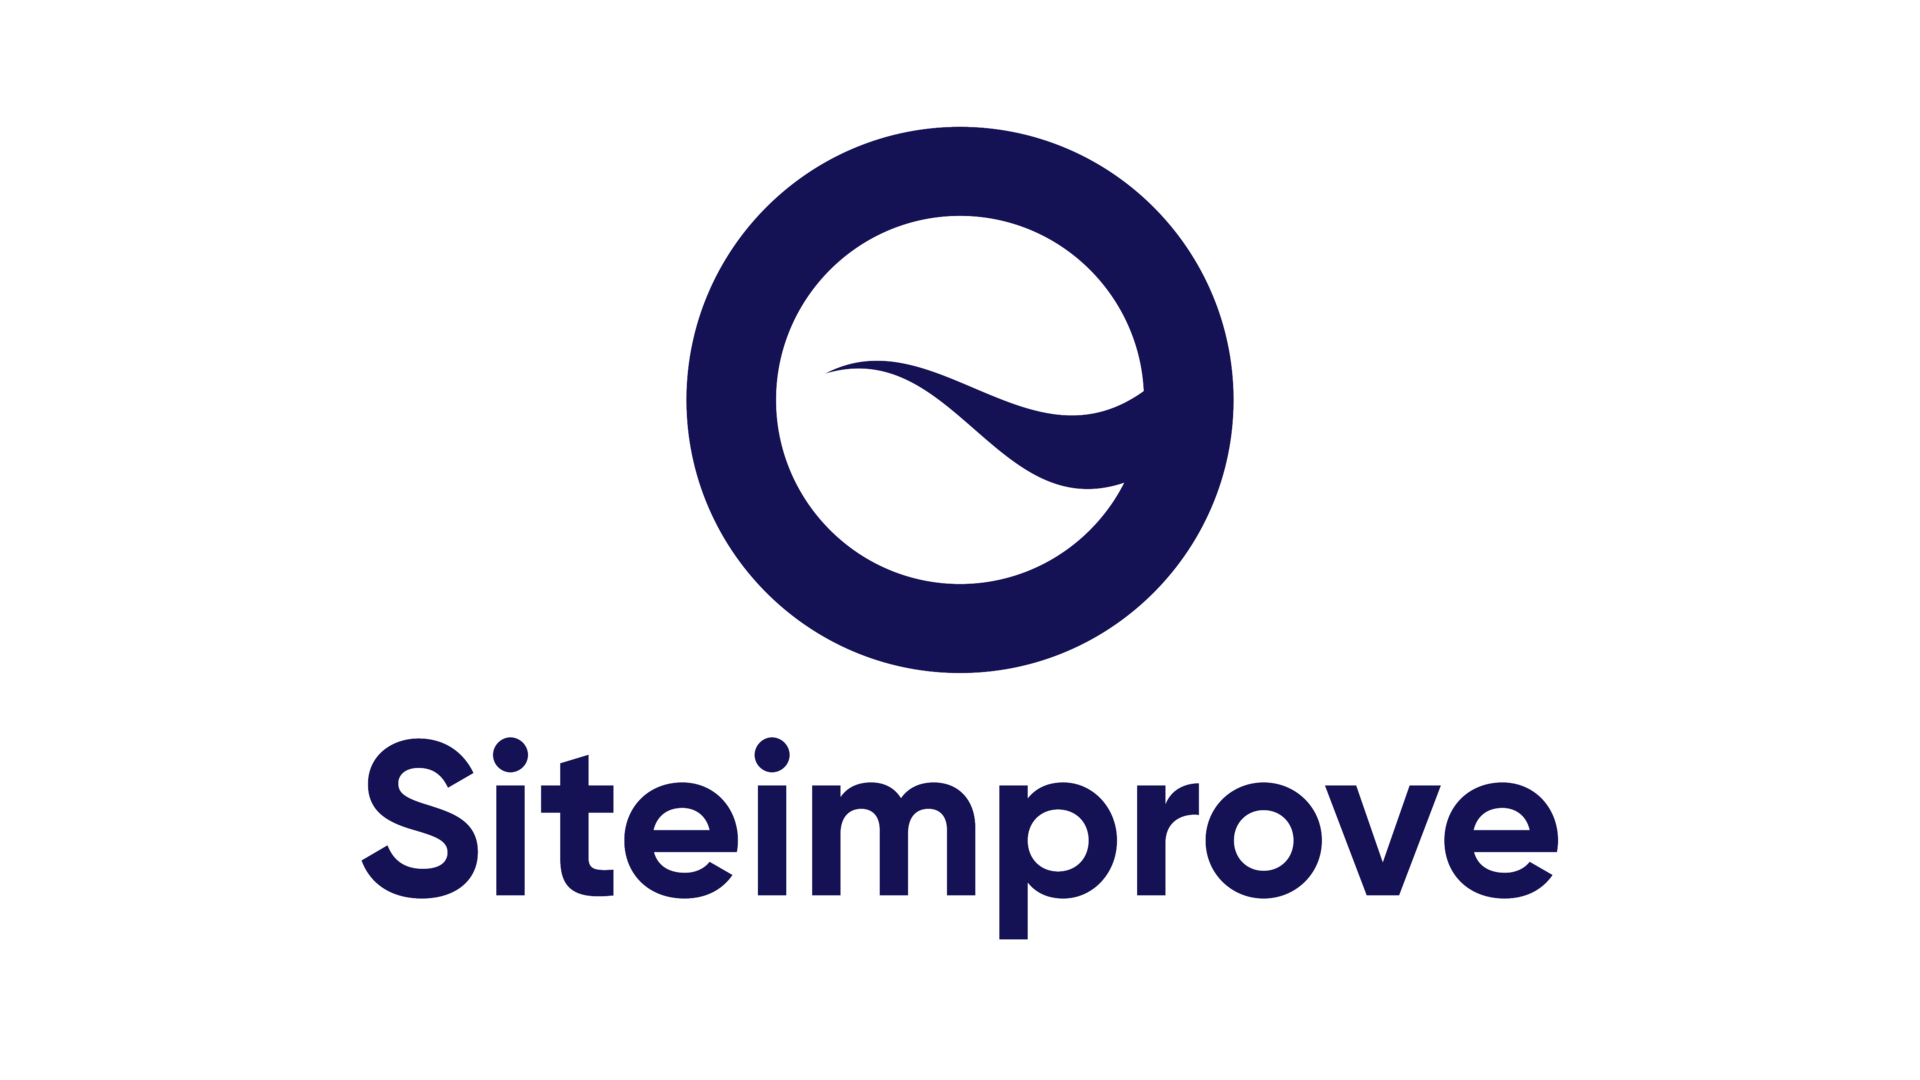 siteimprove logo